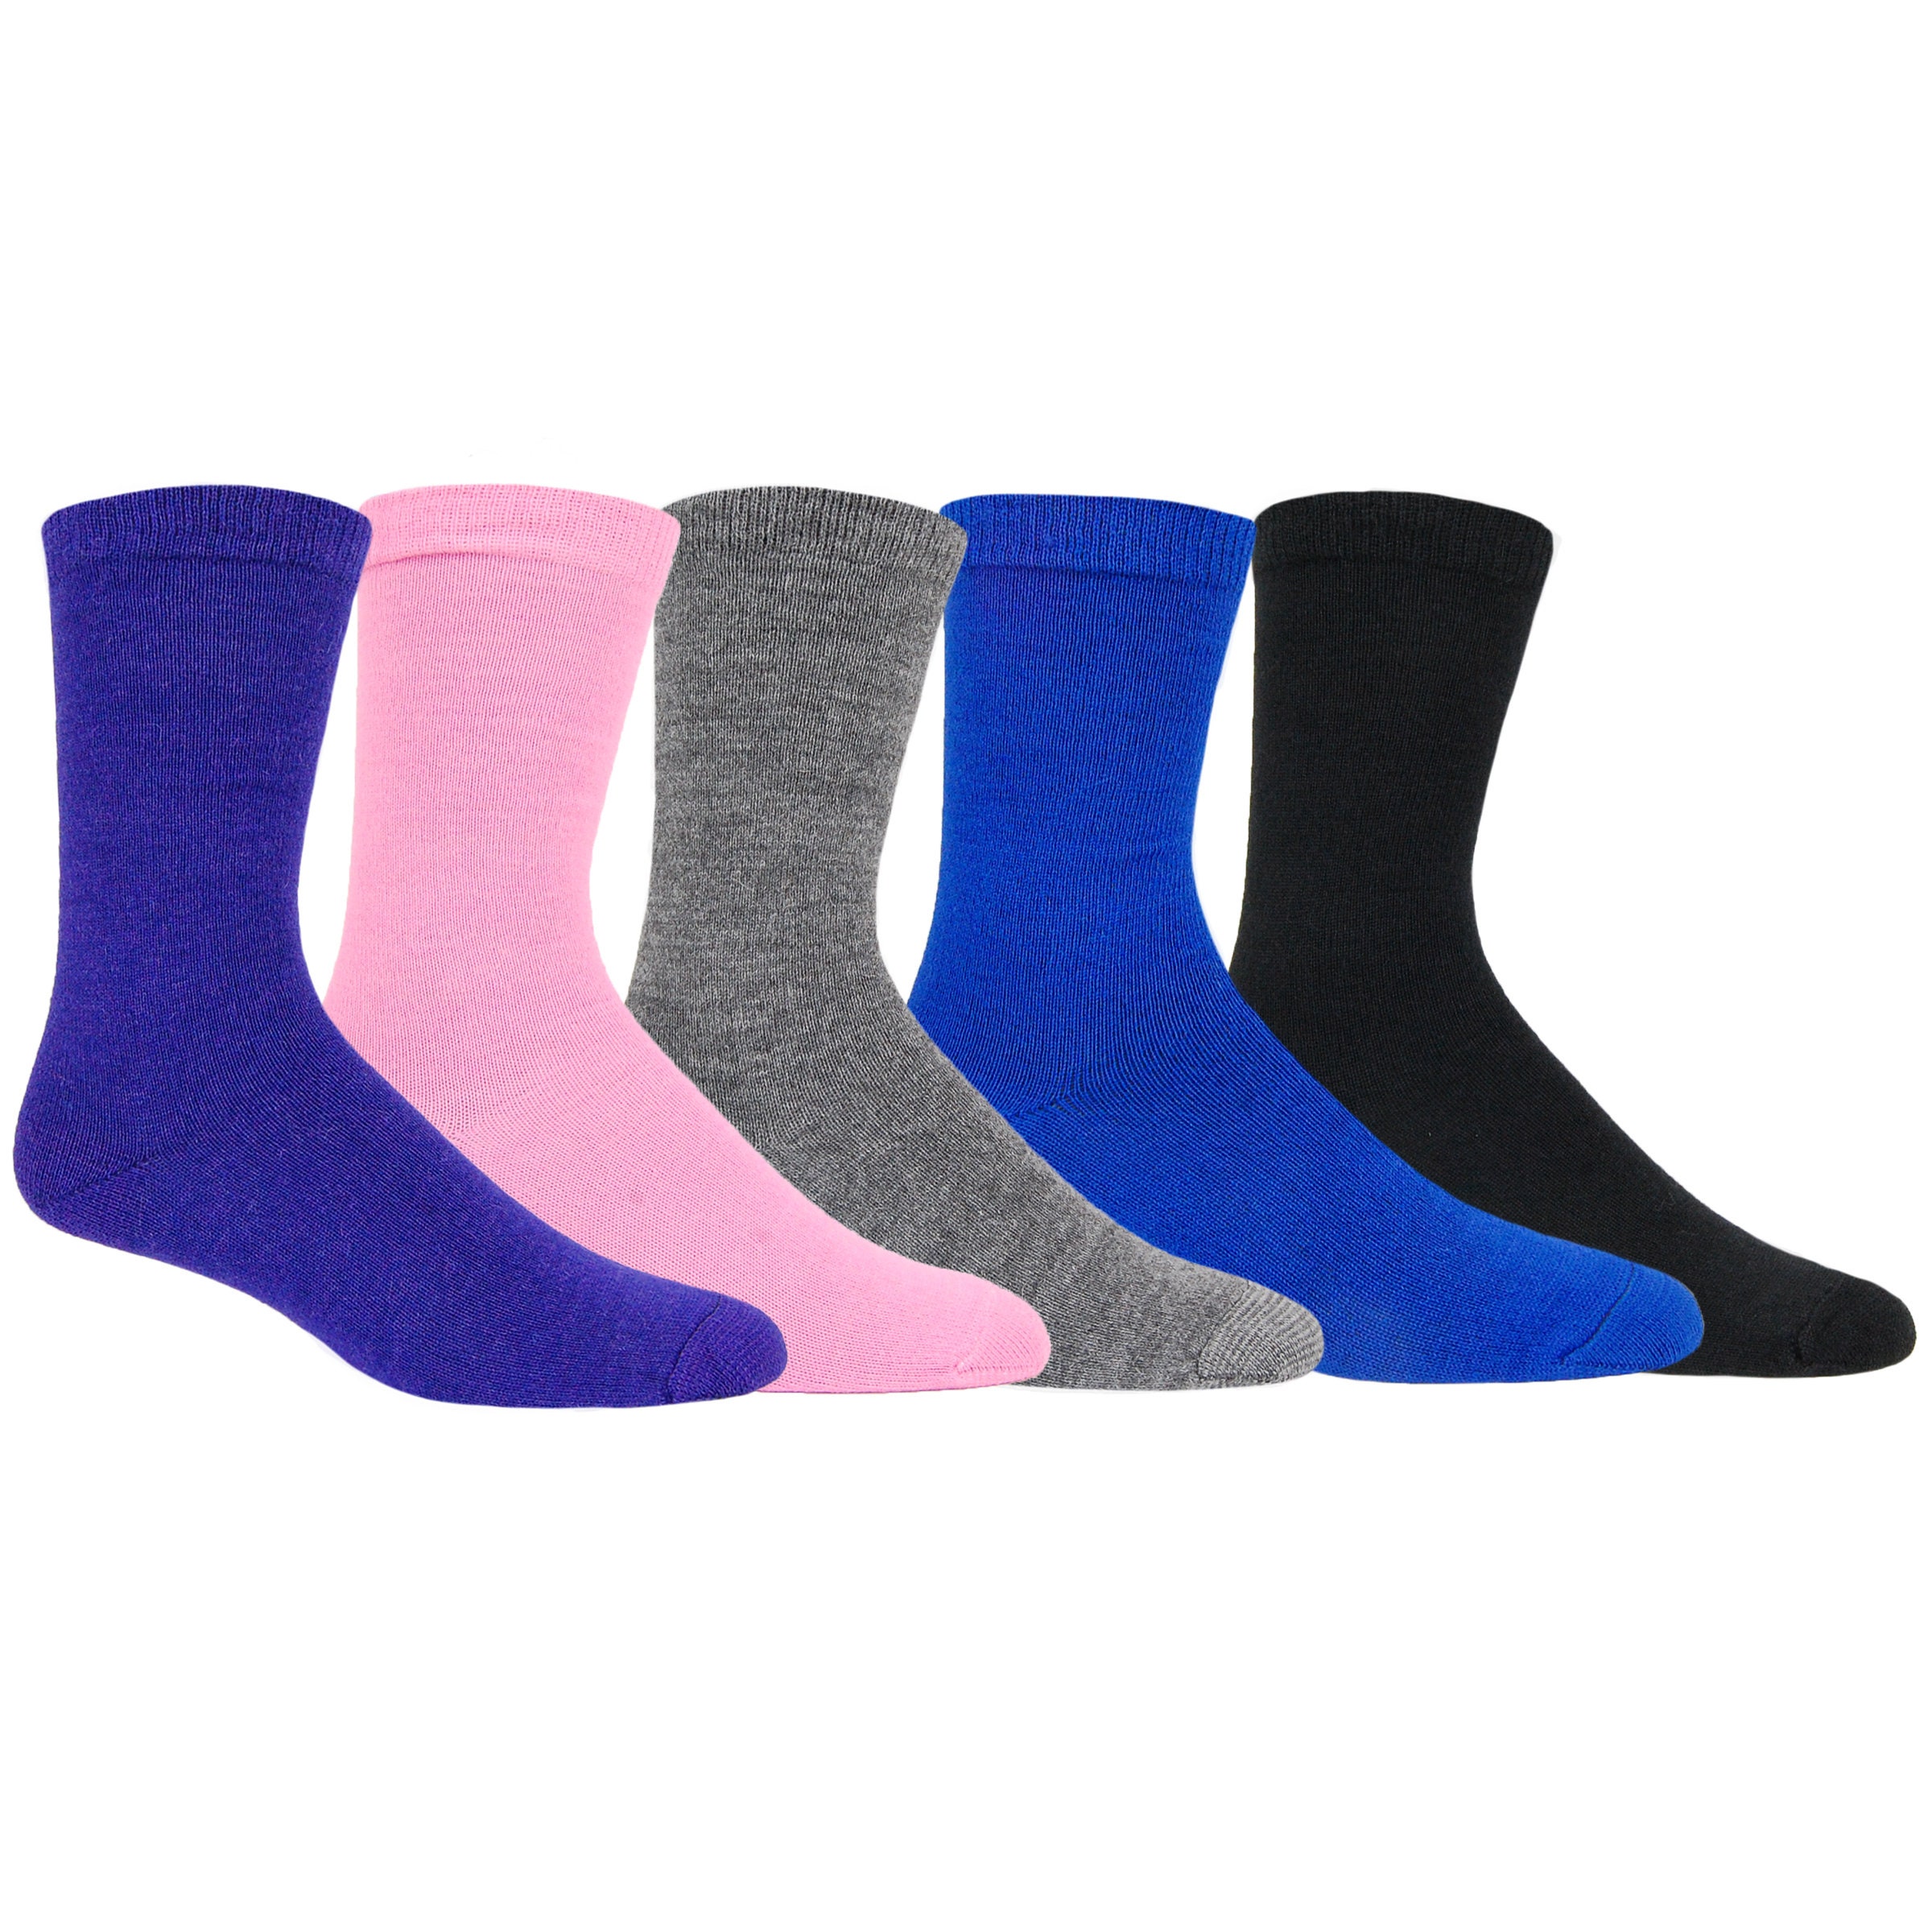 Alpaca Socks - Dress Blend Lightweight Crew Athletic & Comfortable Sports Solid Colors For Men Women